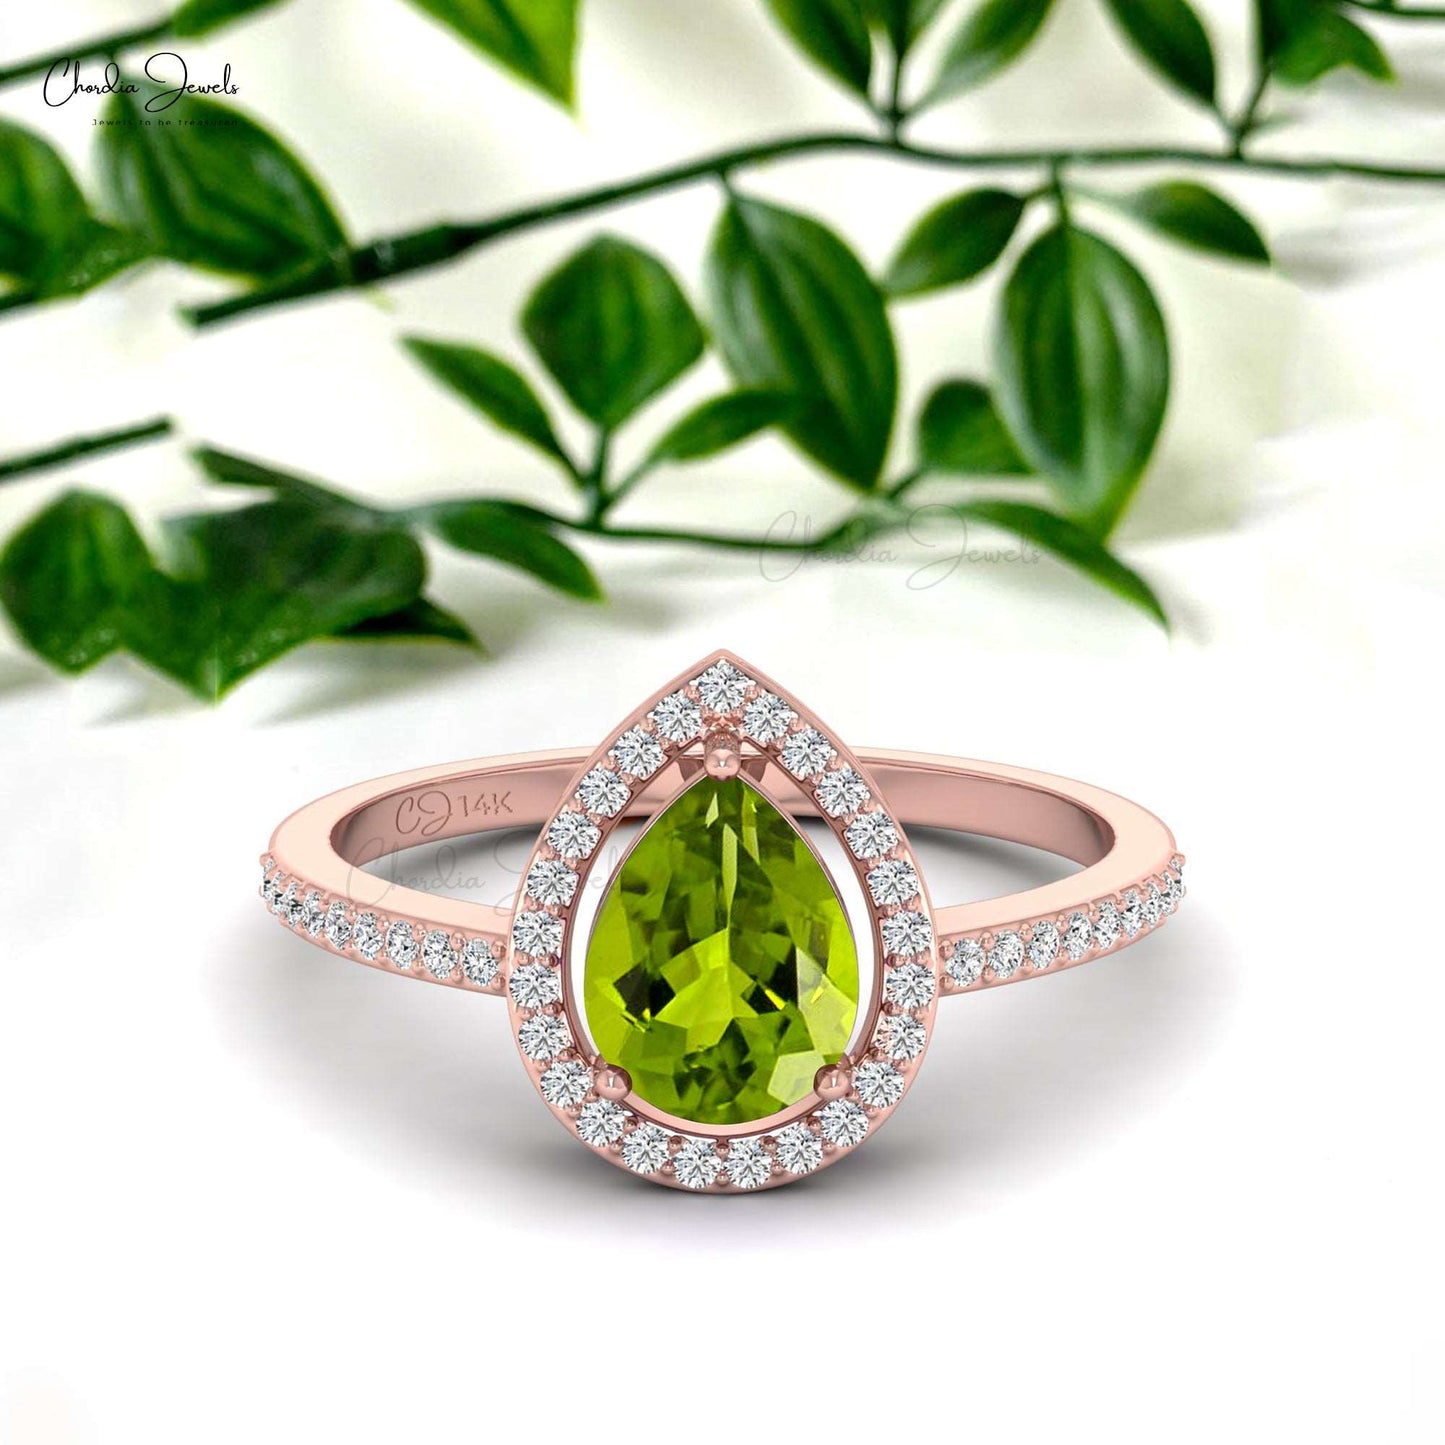 14k Solid Gold Handmade Diamond Ring, 8x6 mm Pear Cut Peridot Prong Setting Halo Engagement Ring, Natural Peridot Solitaire Halo Ring, Wedding Ring